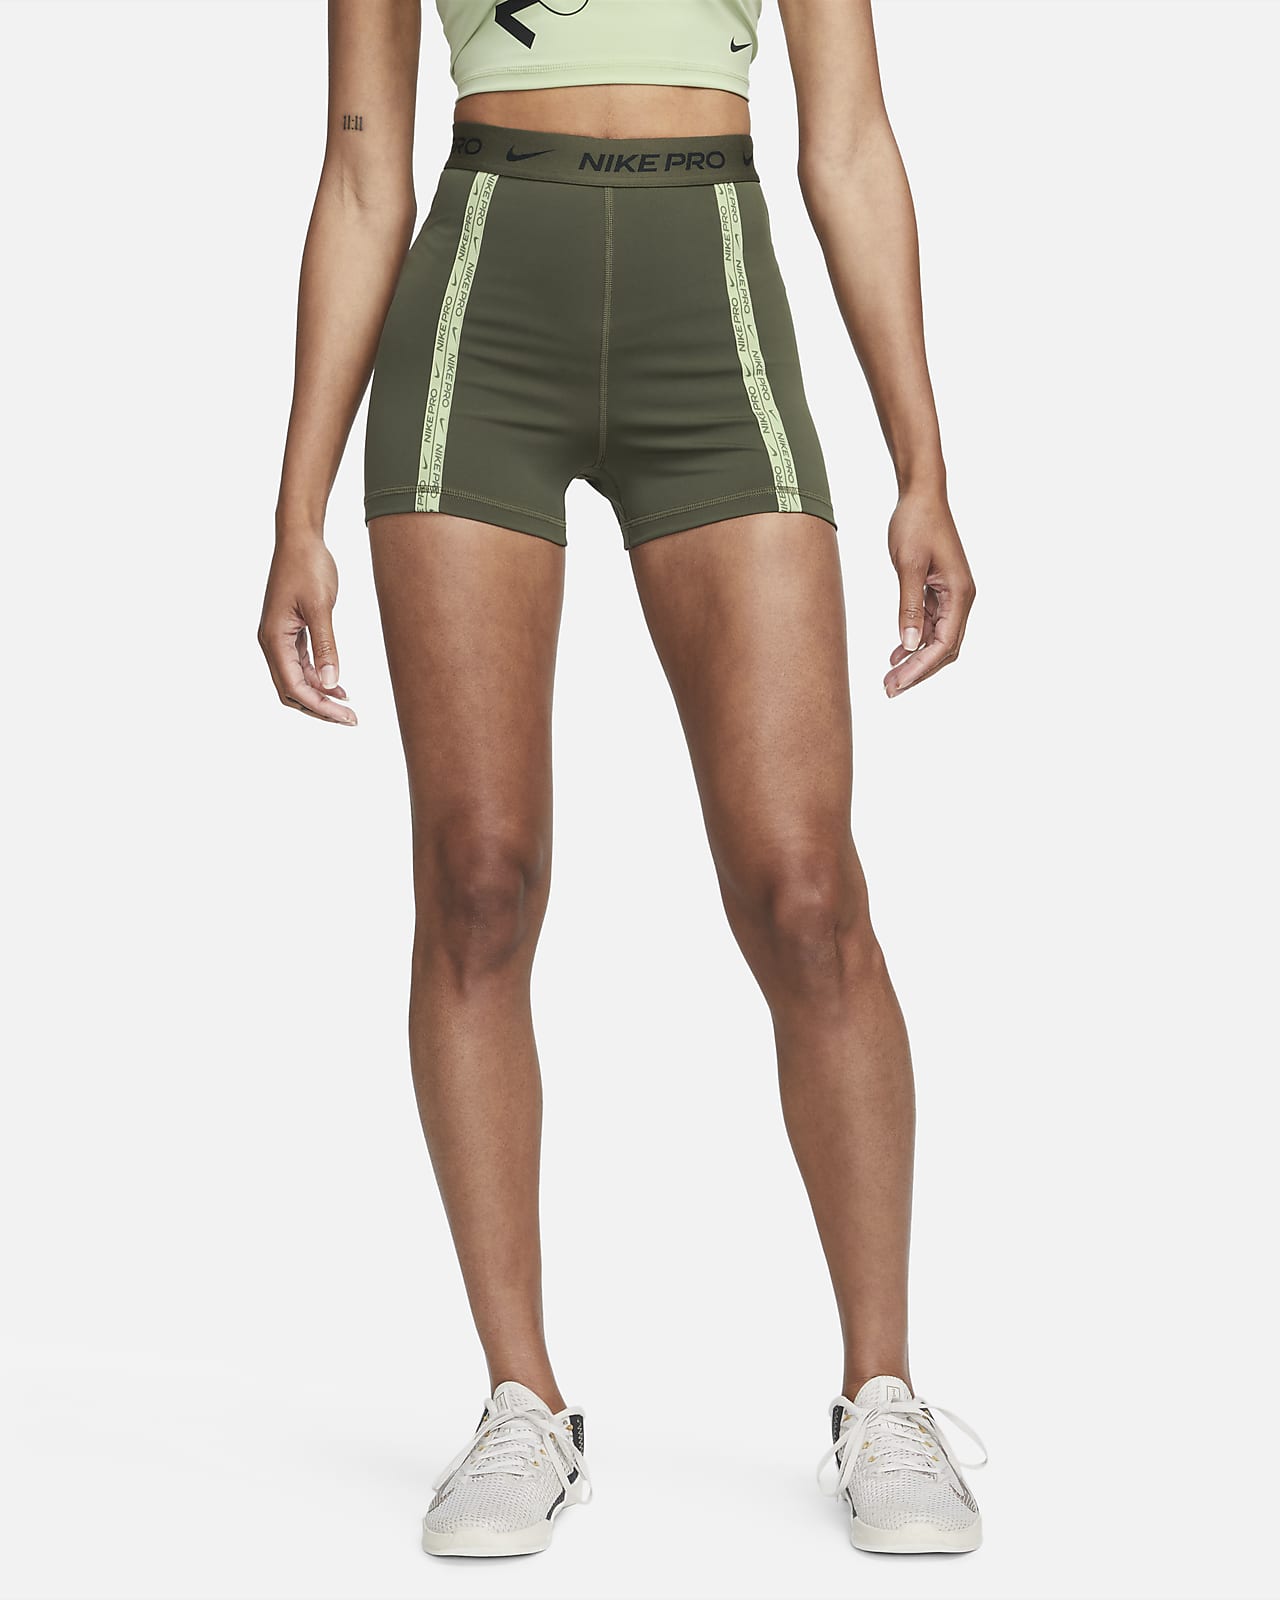 Nike Yoga Dri-FIT high rise legging boot shorts in purple